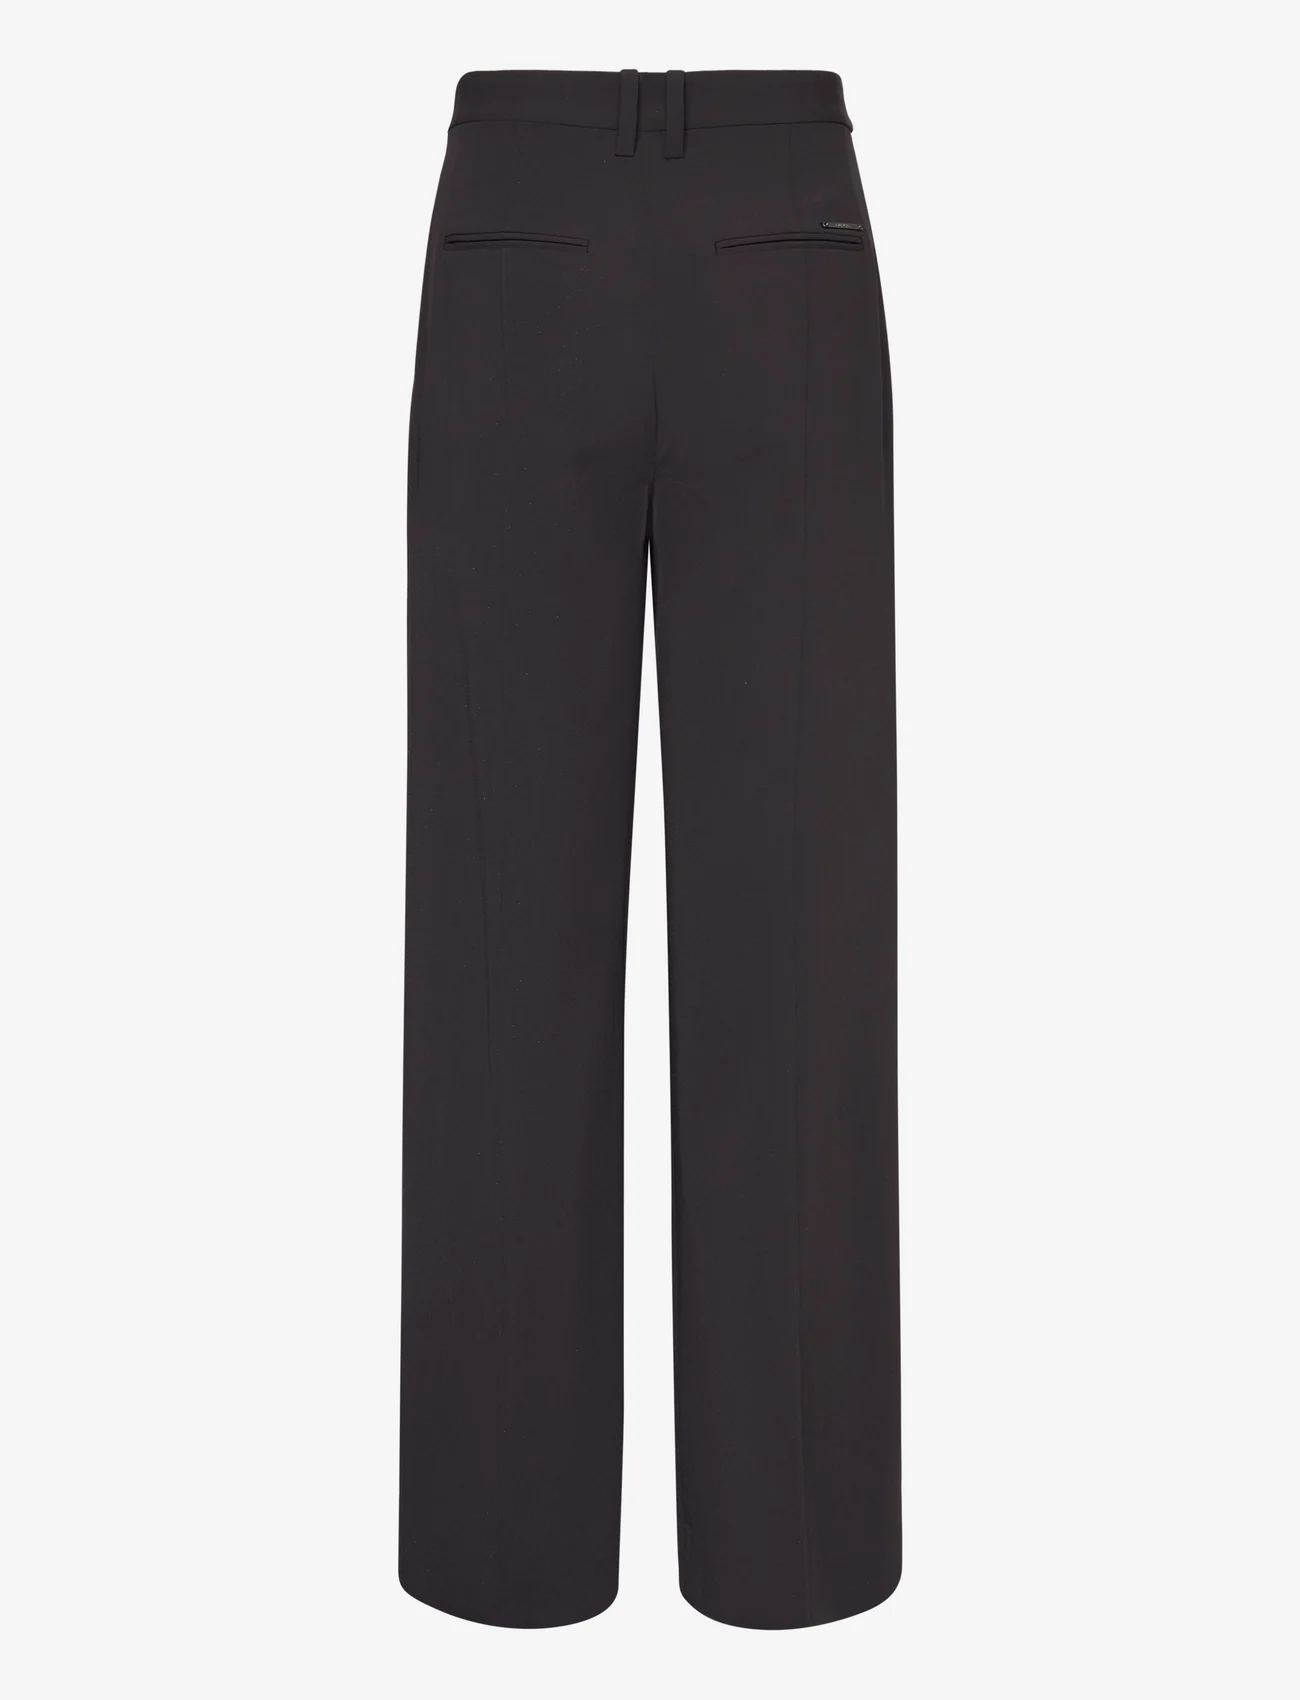 Calvin Klein - STRUCTURE TWILL WIDE LEG PANT - bukser med brede ben - ck black - 1